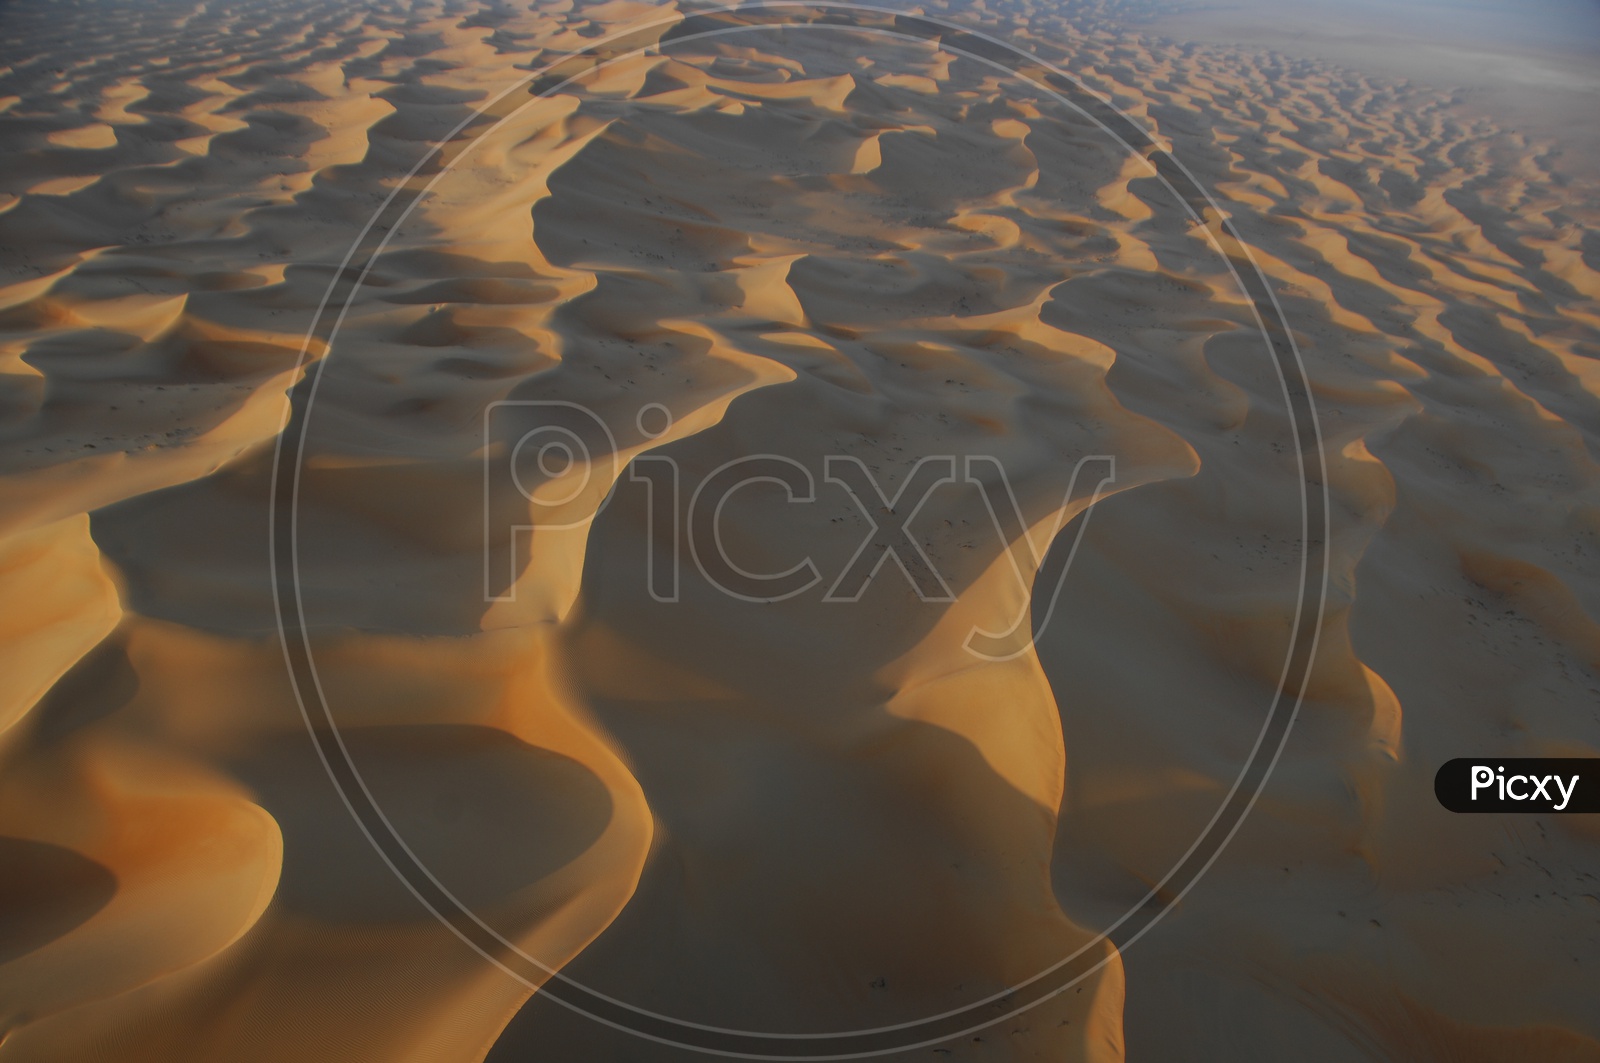 Wave Like Patterns On Desert Sand